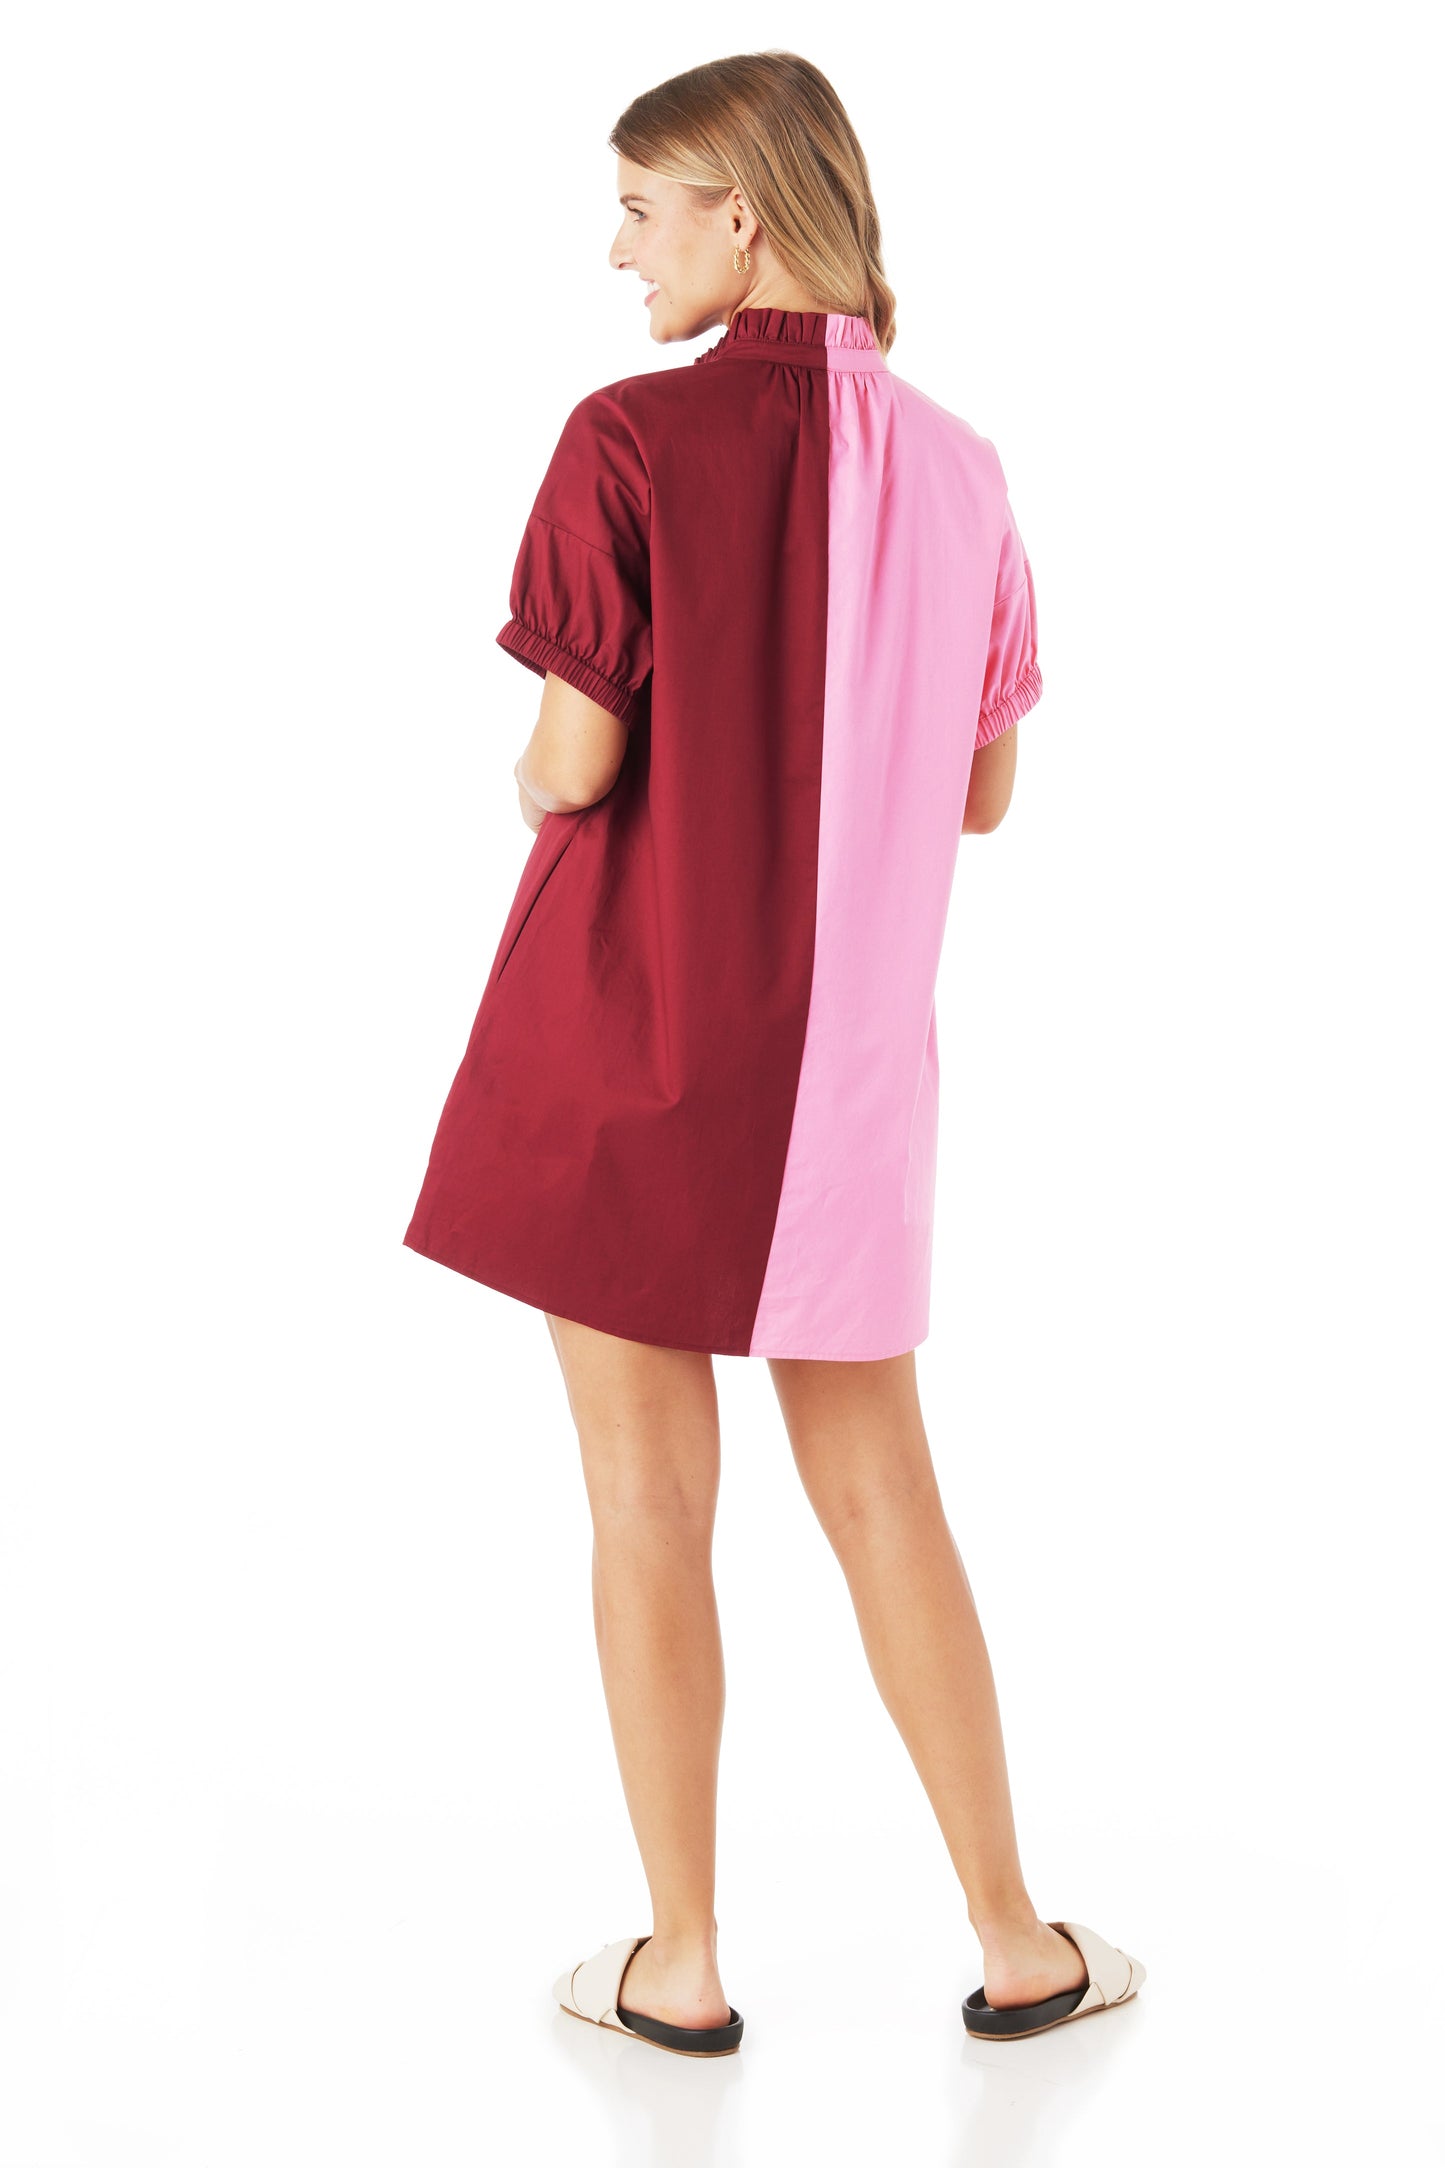 CROSBY - Betts Dress - Pink Garnet